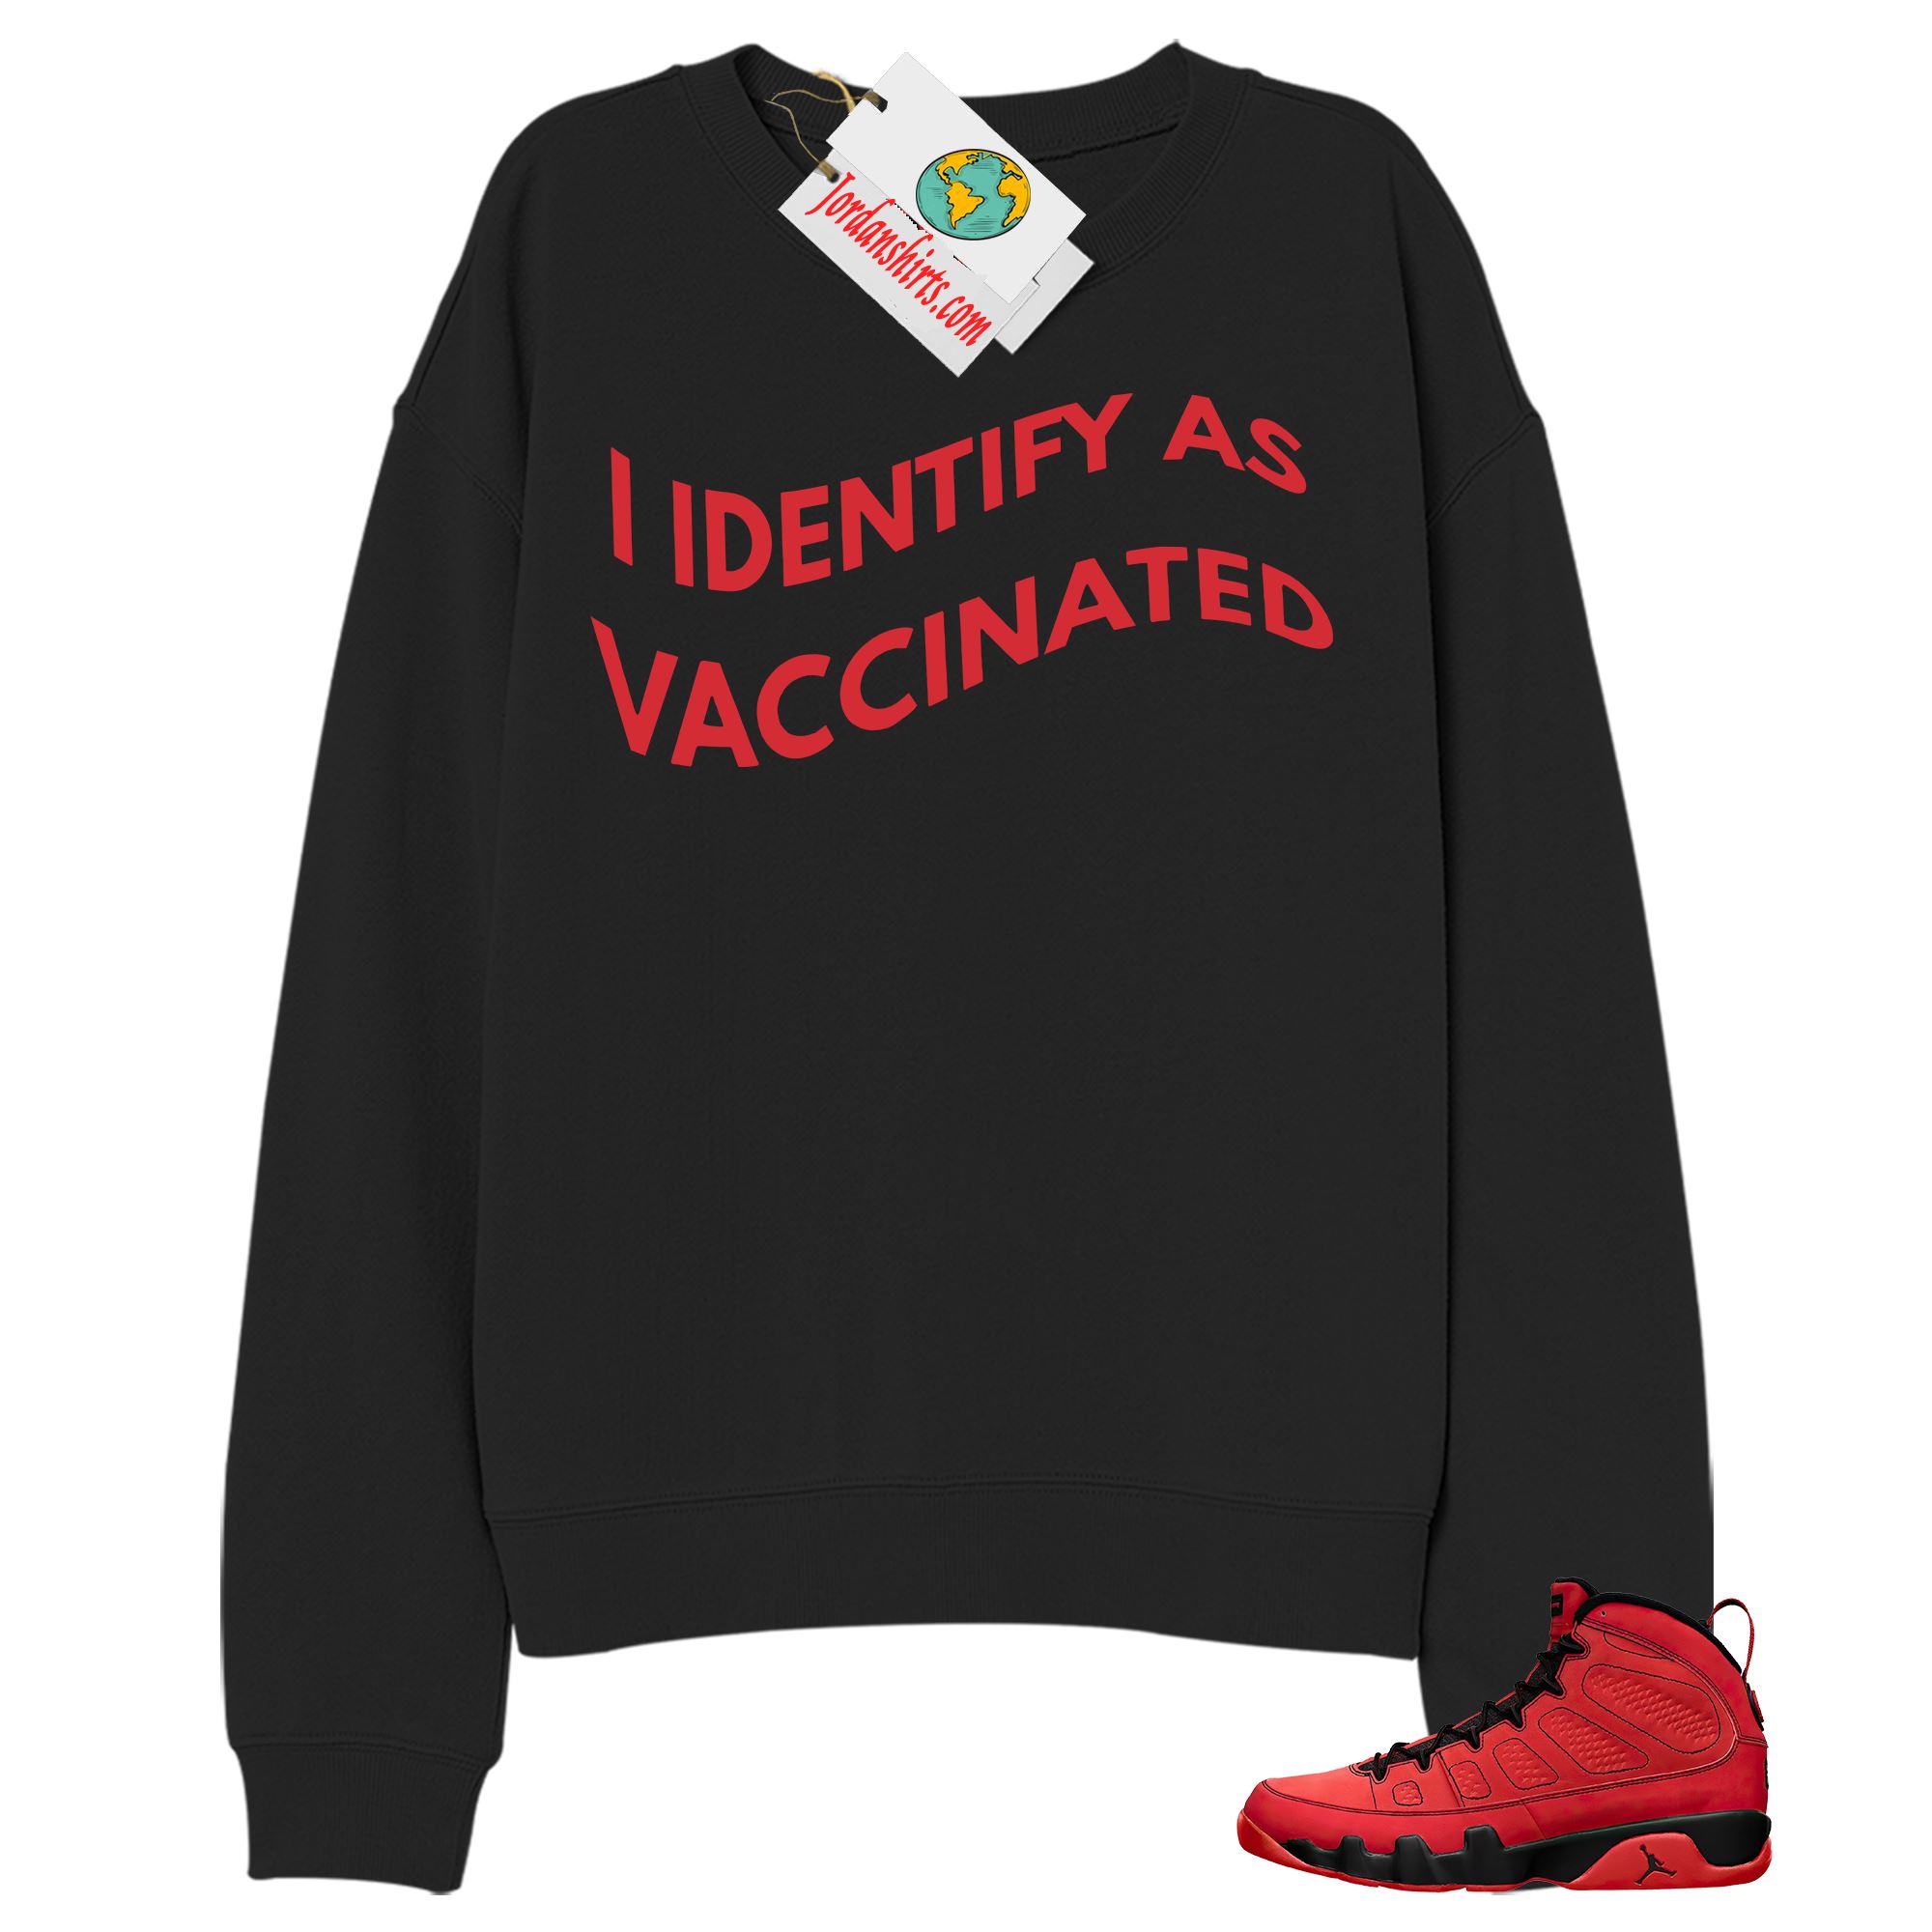 Jordan 9 Sweatshirt, I Identify As Vaccinated Black Sweatshirt Air Jordan 9 Chile Red 9s Plus Size Up To 5xl